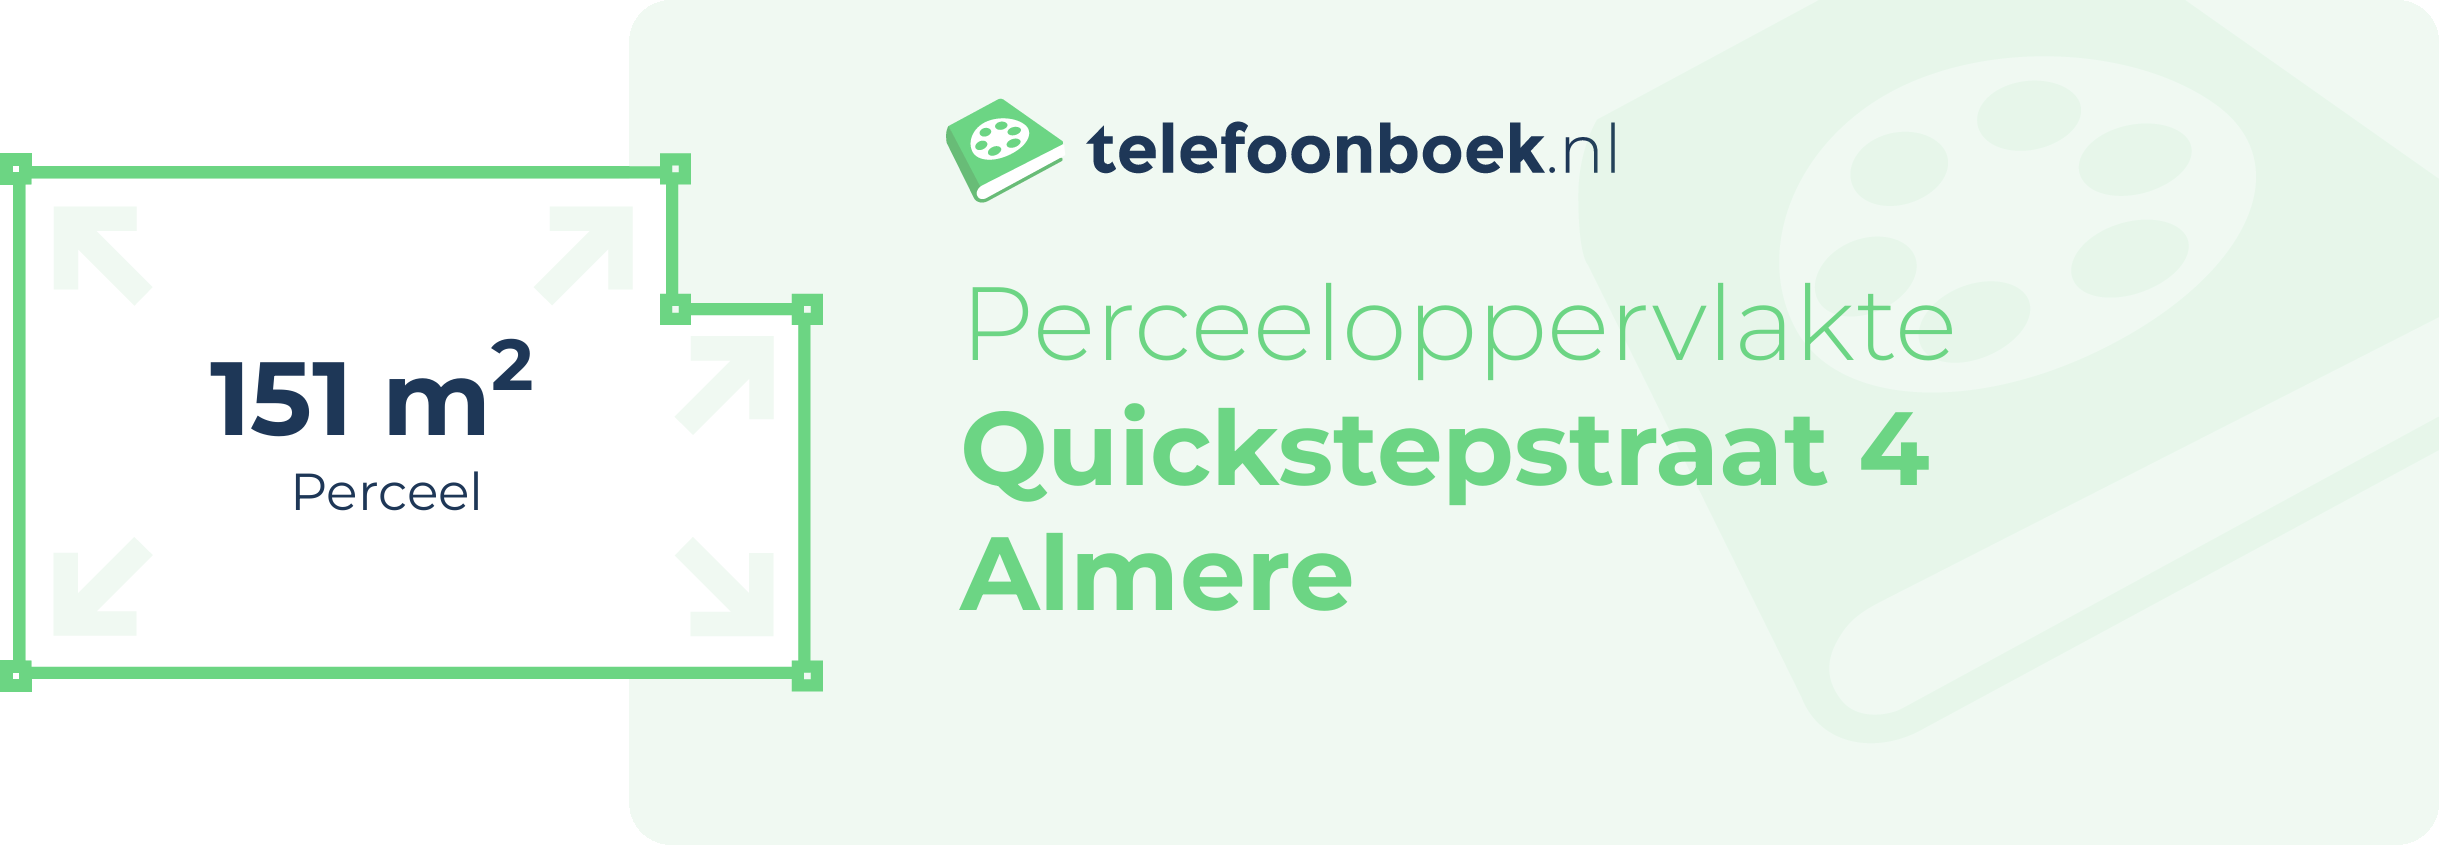 Perceeloppervlakte Quickstepstraat 4 Almere